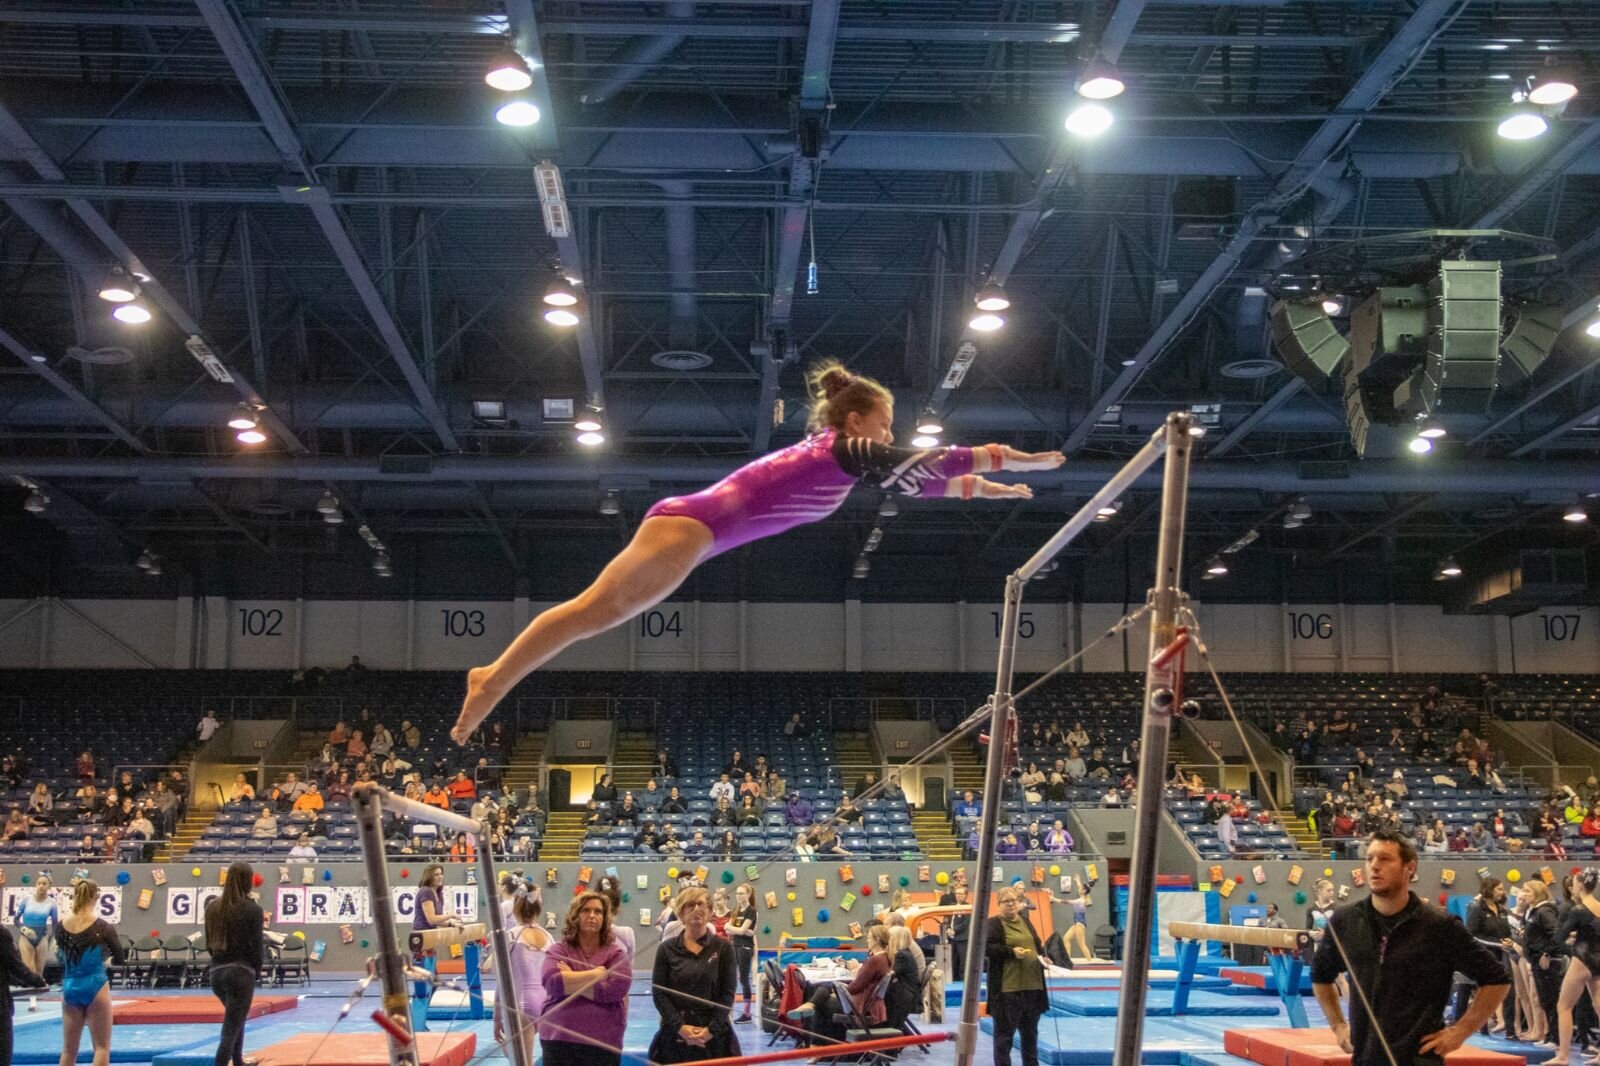 Branch Gymnastics organizes gymnastics competitions, like this one at Kellogg Arena.